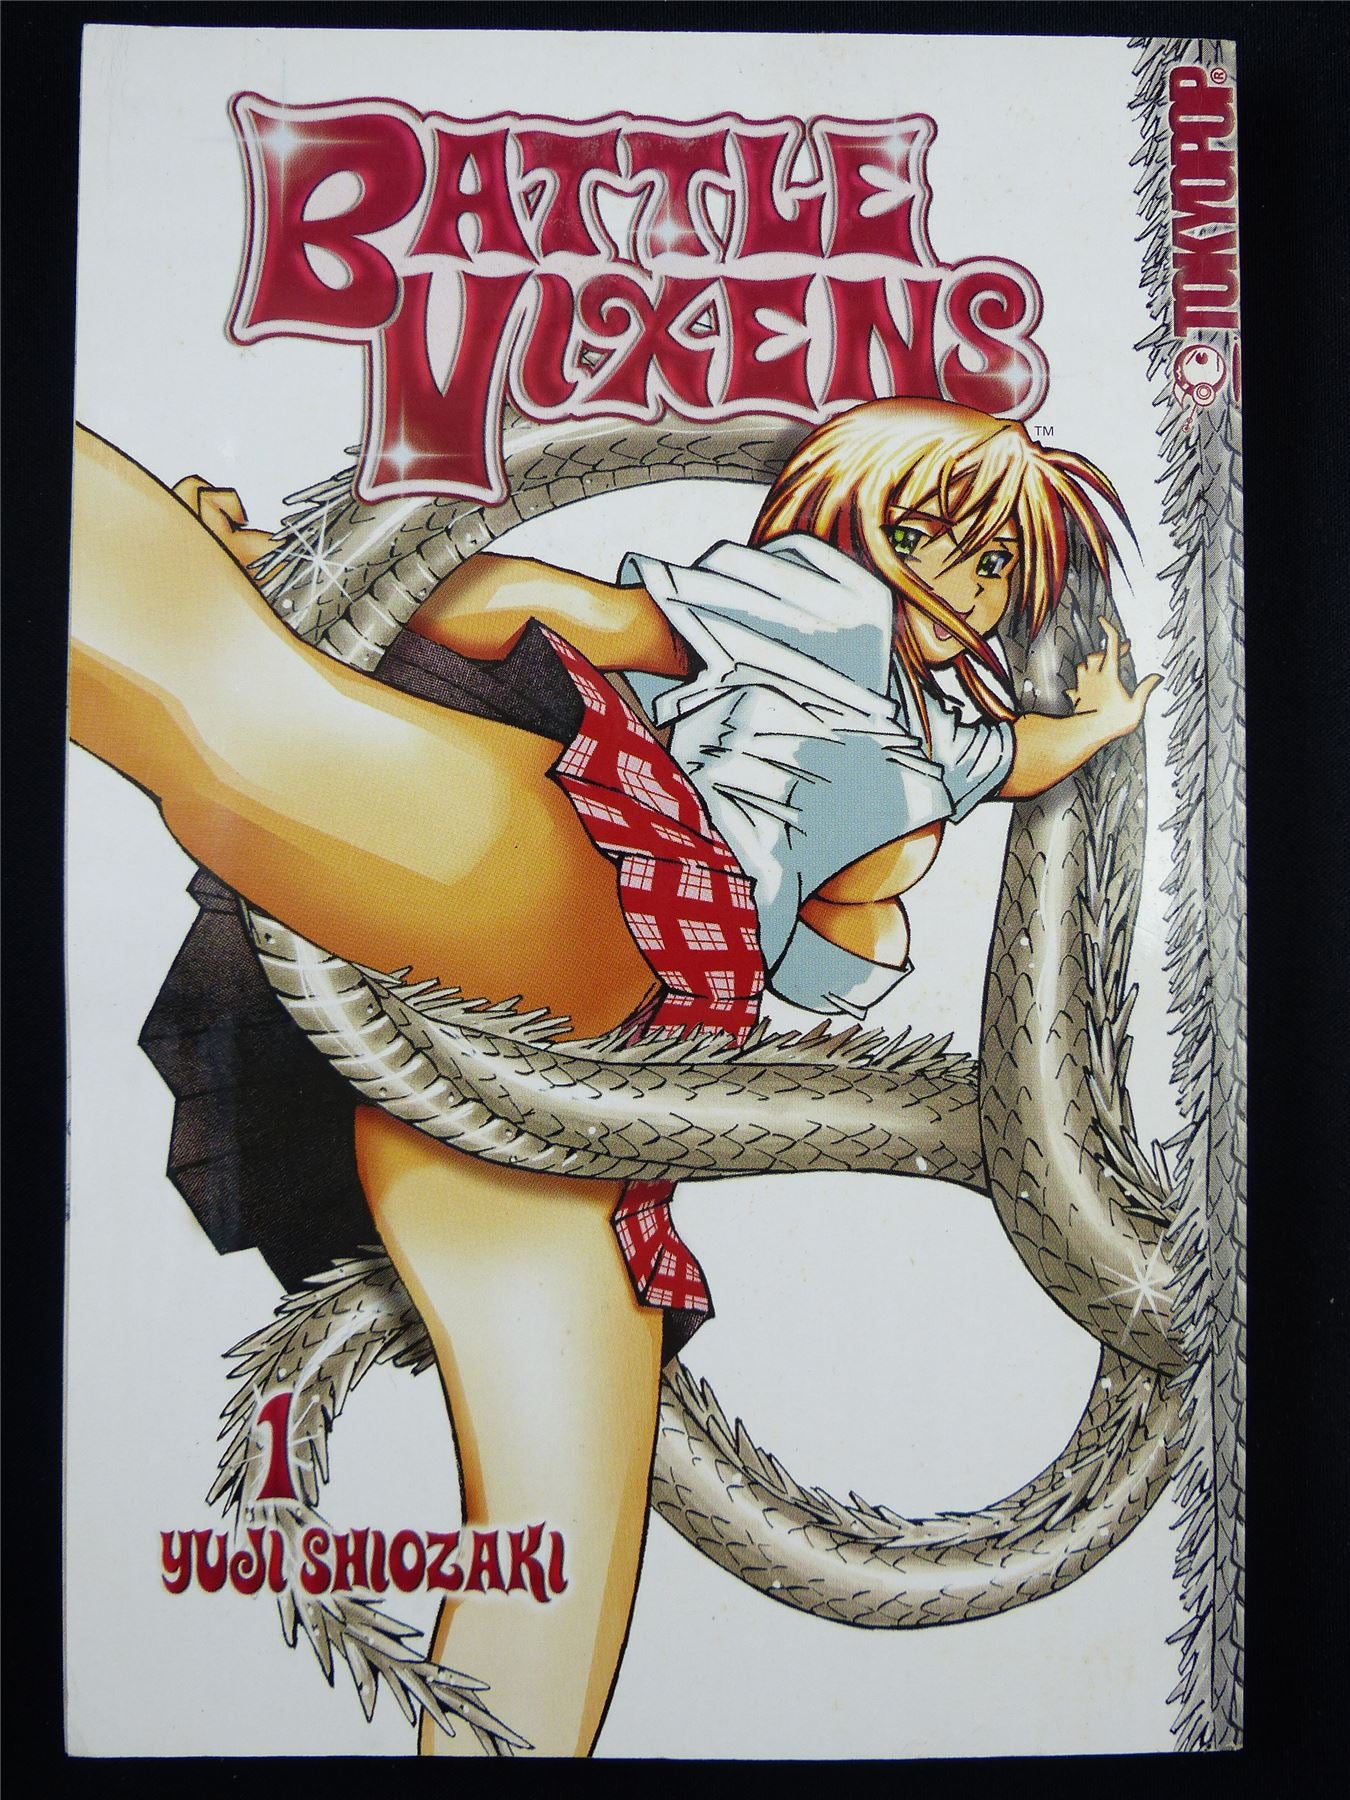 BATTLE Vixens Volume 1 - Tokyo Pop Manga #3LB